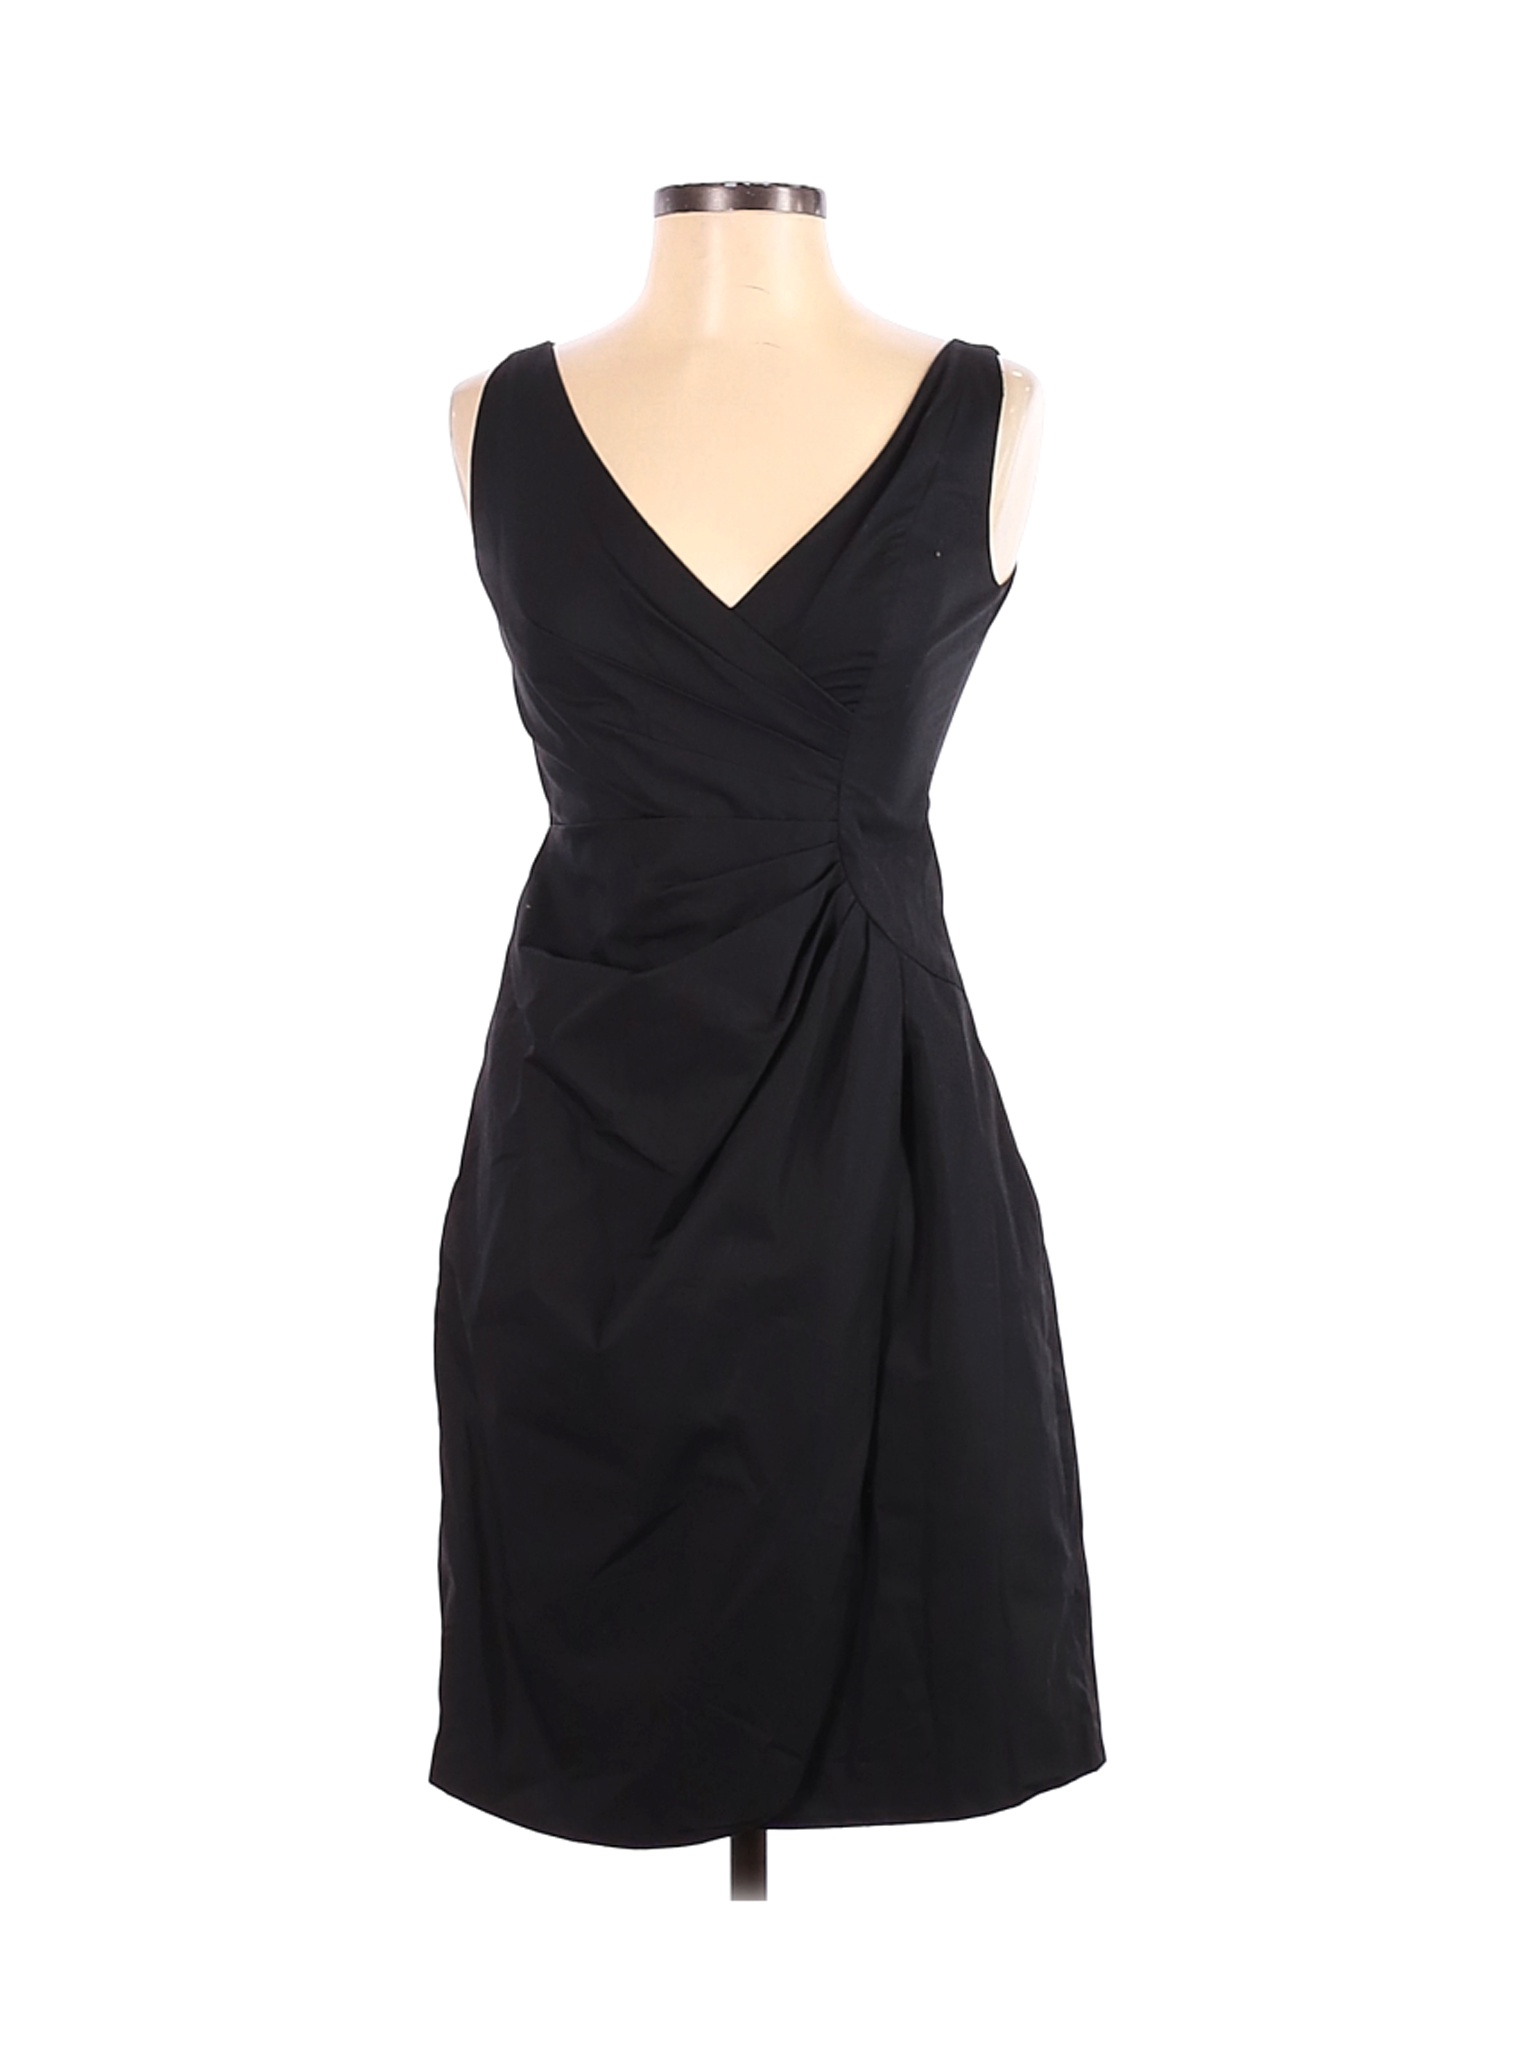 J.Crew Women Black Cocktail Dress 2 Petites | eBay